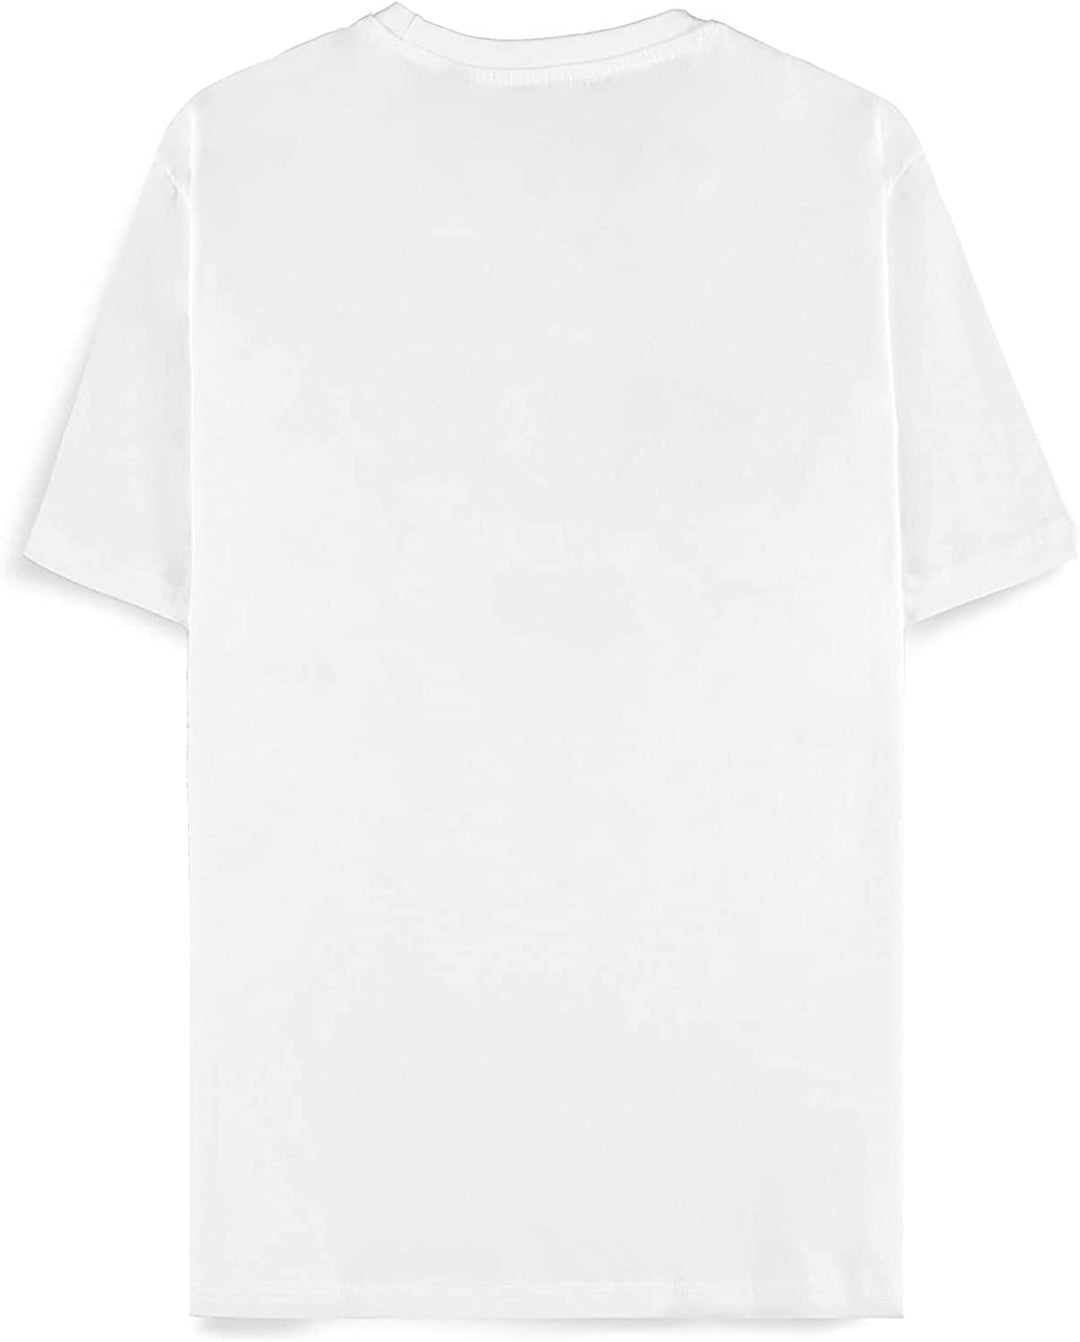 POKEMON - Dracaufeu #006 - T-Shirt Herren (L)